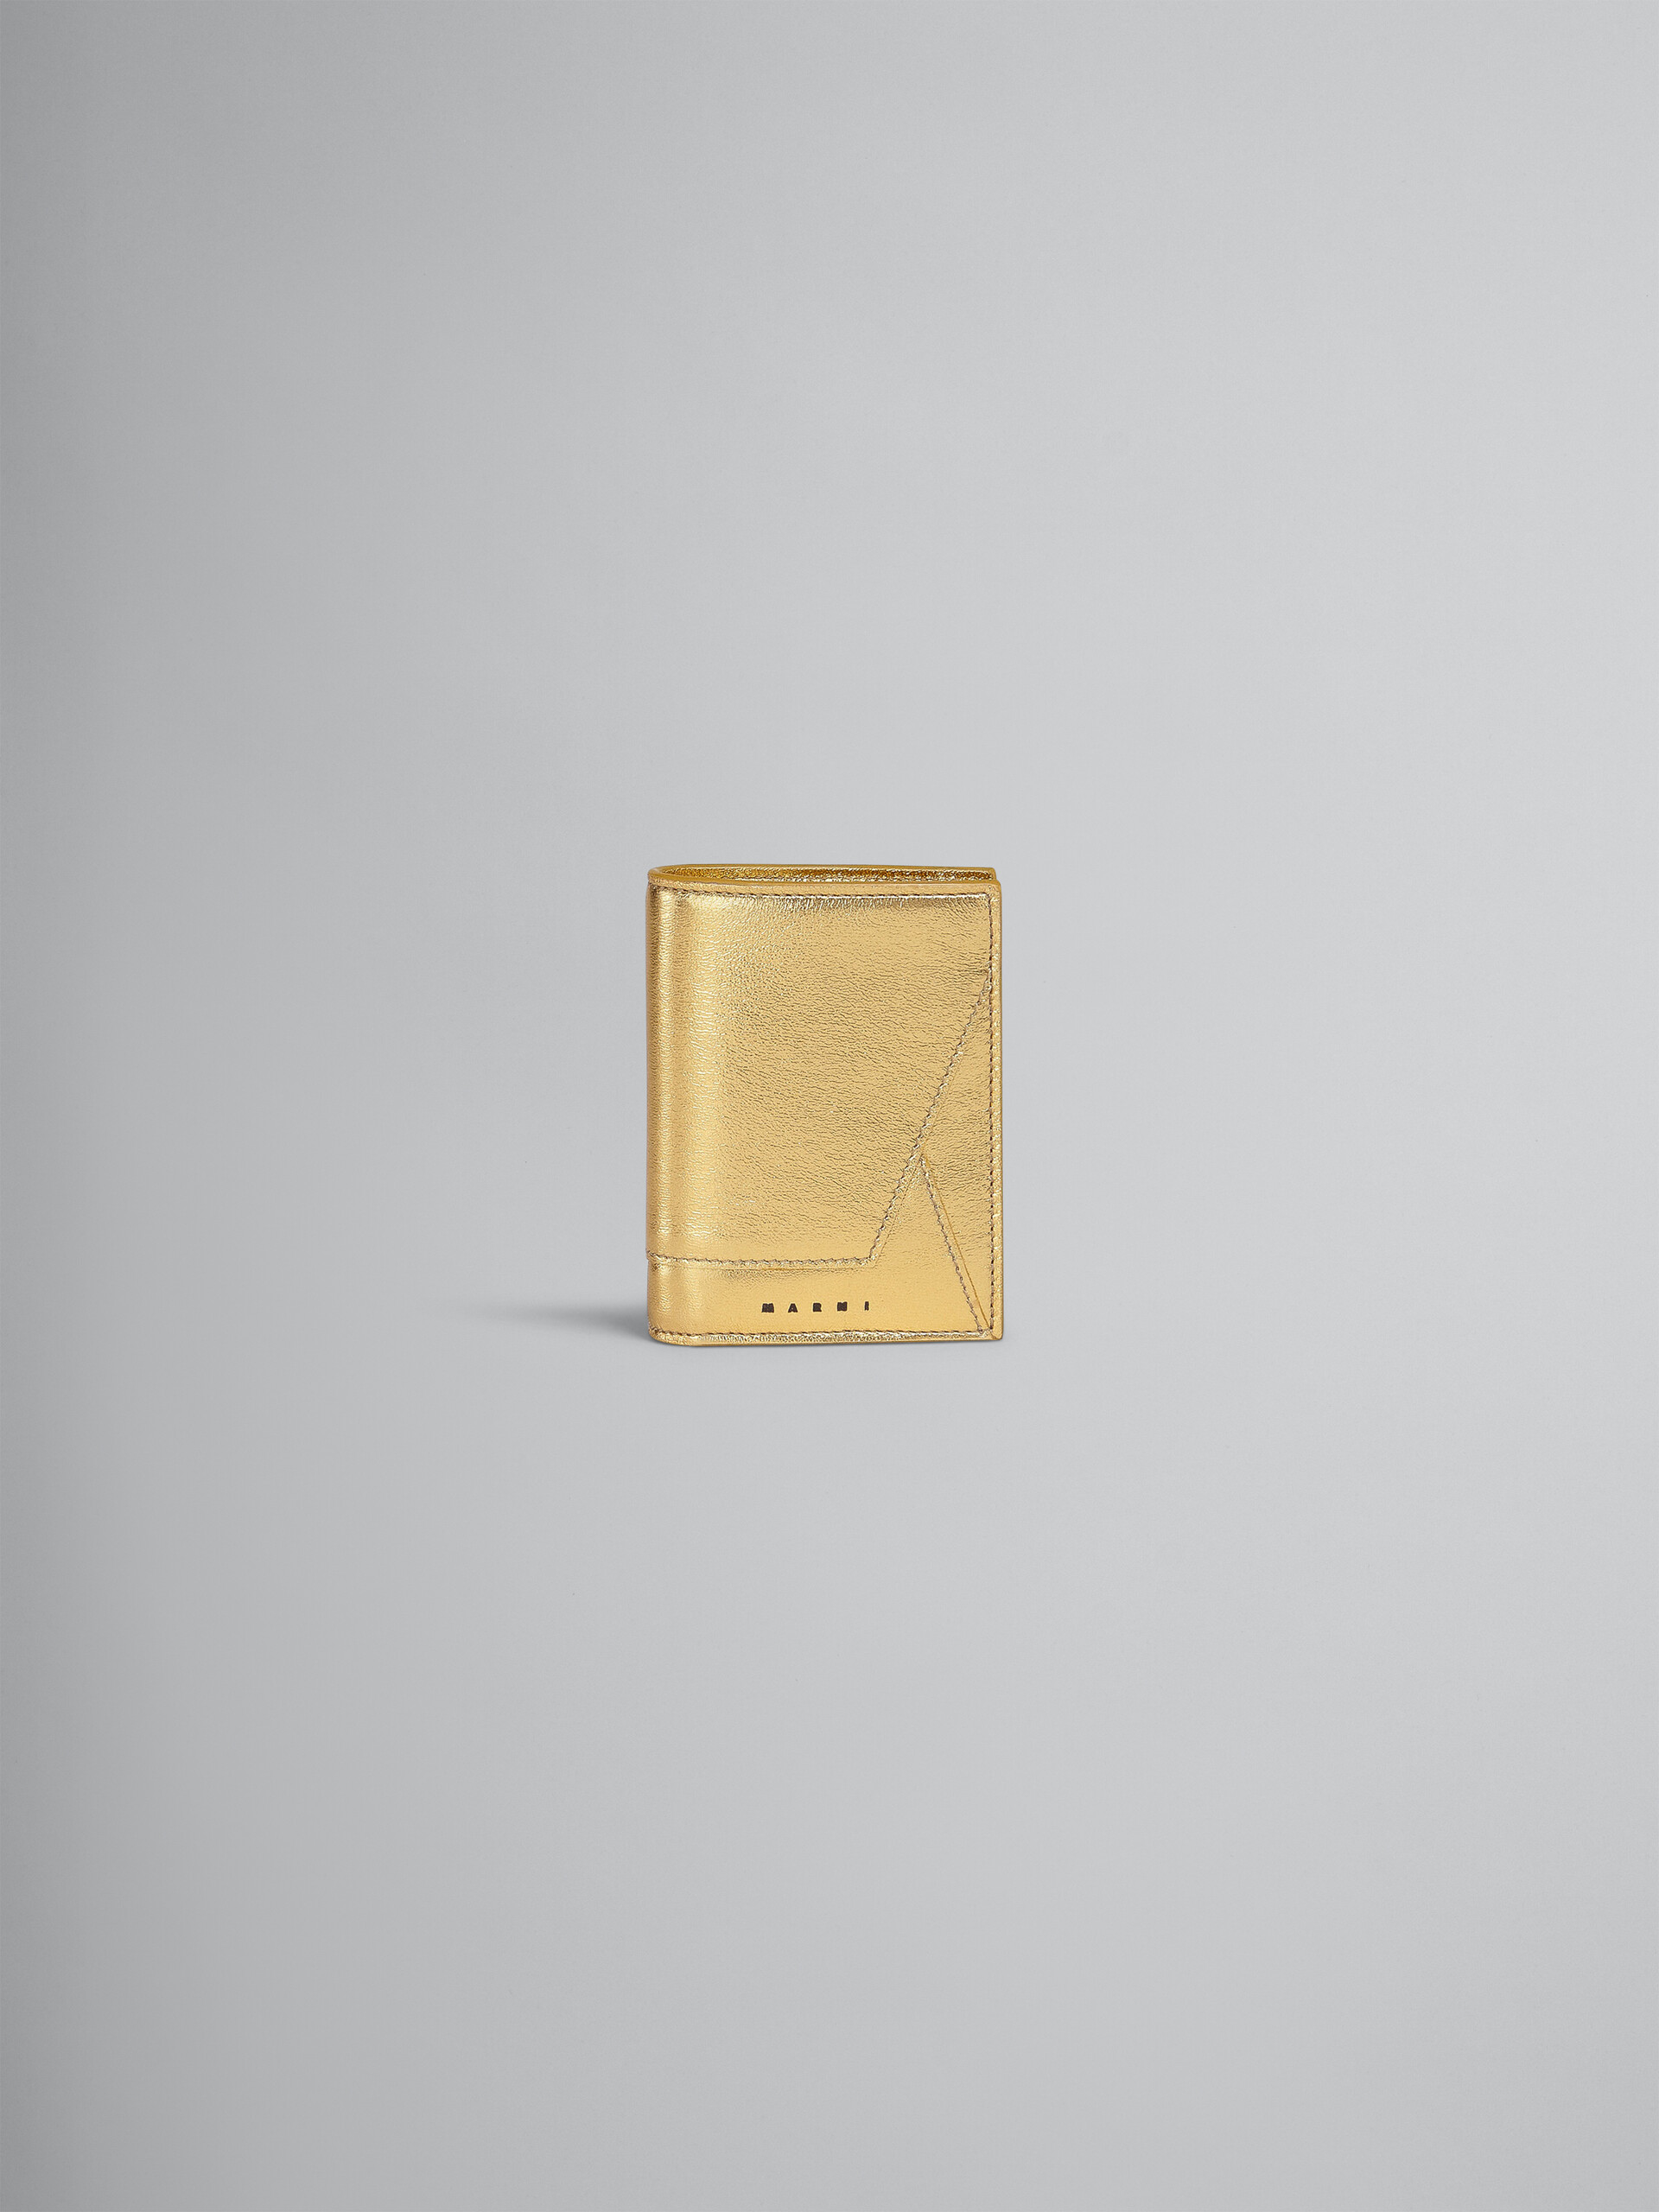 Gold metallic leather bi-fold wallet